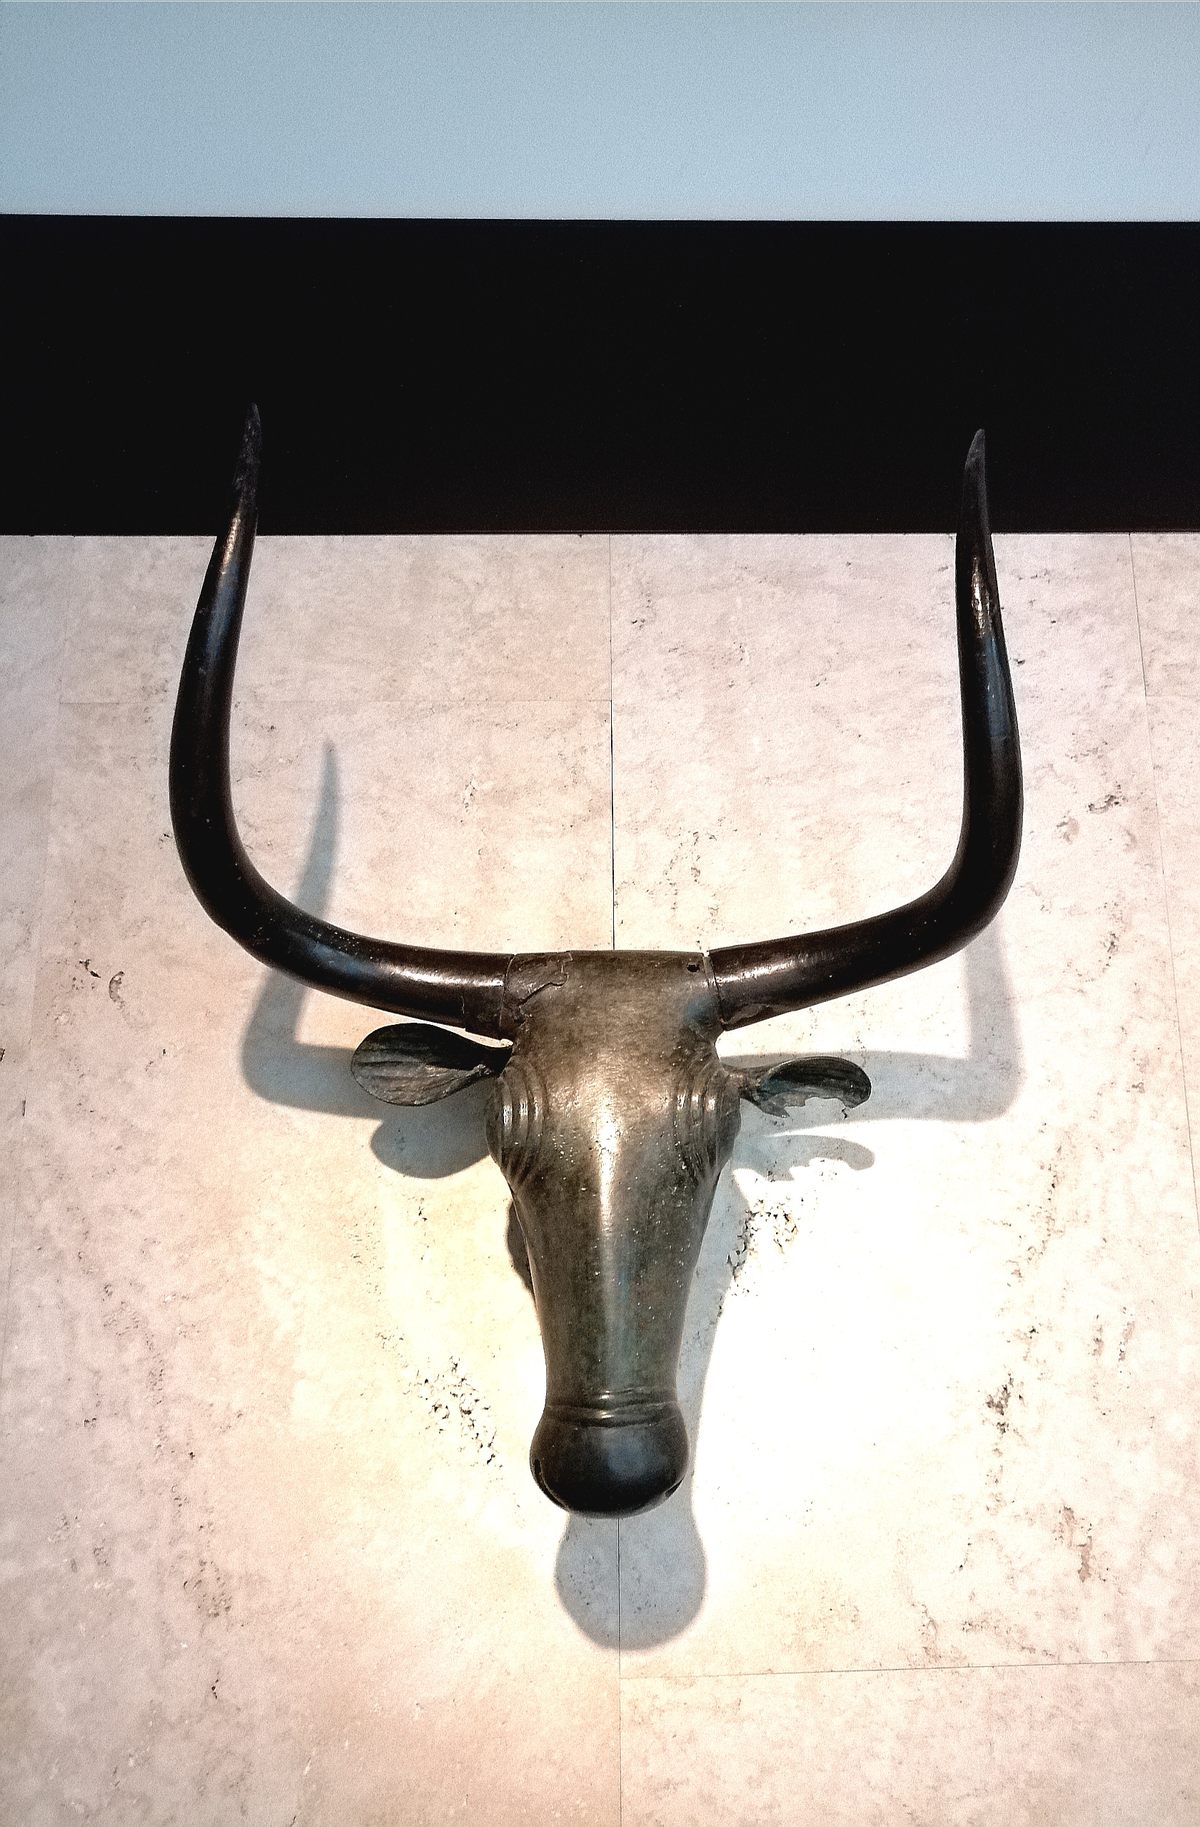 Costitx Bulls – Madrid, Spain - Atlas Obscura